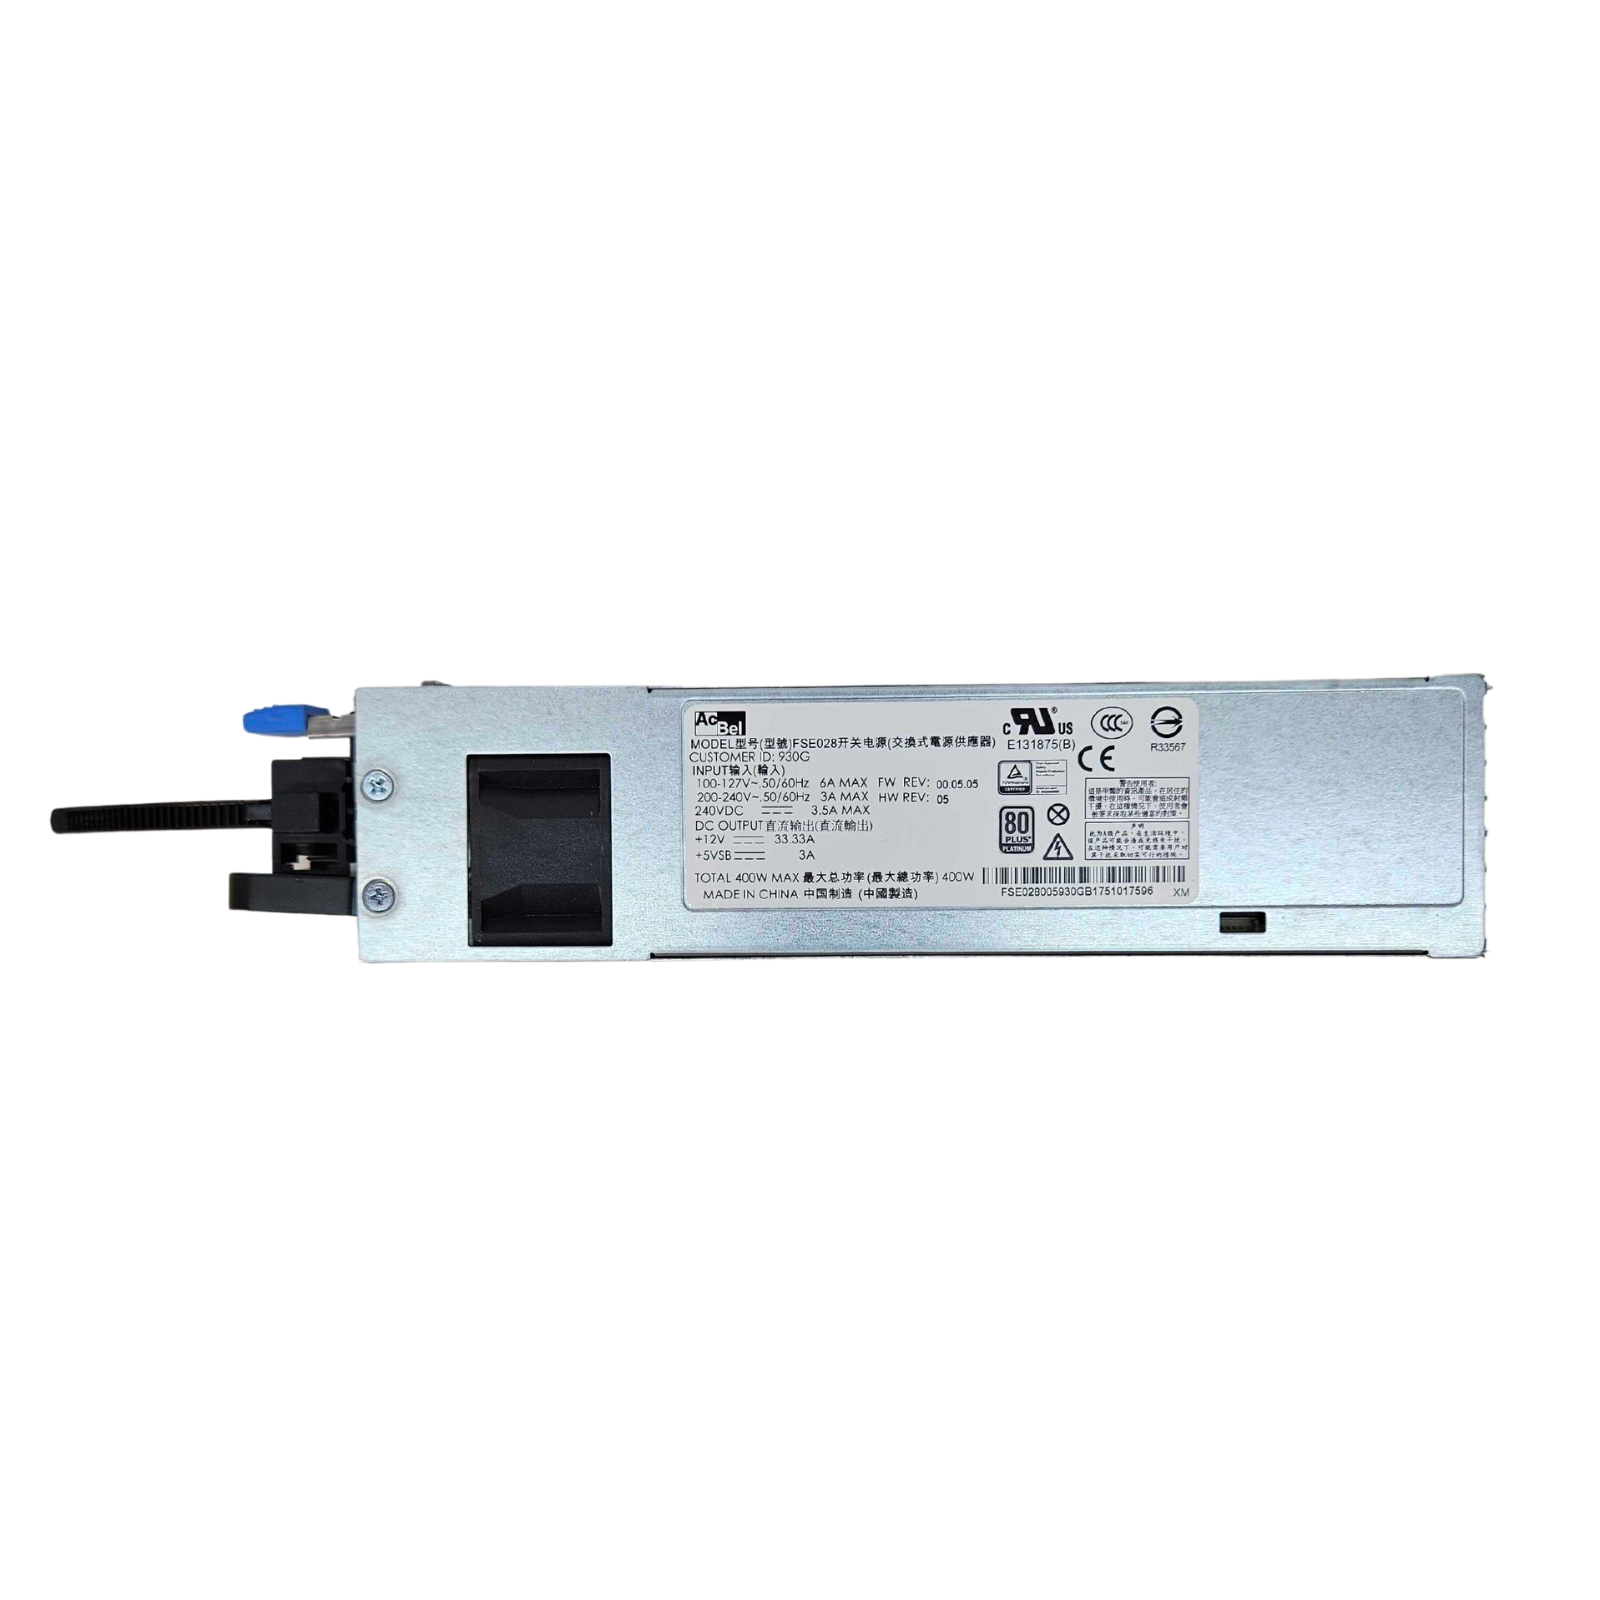 AcBel 400W 80+ Platinum Switching Power Supply  (FSE028)